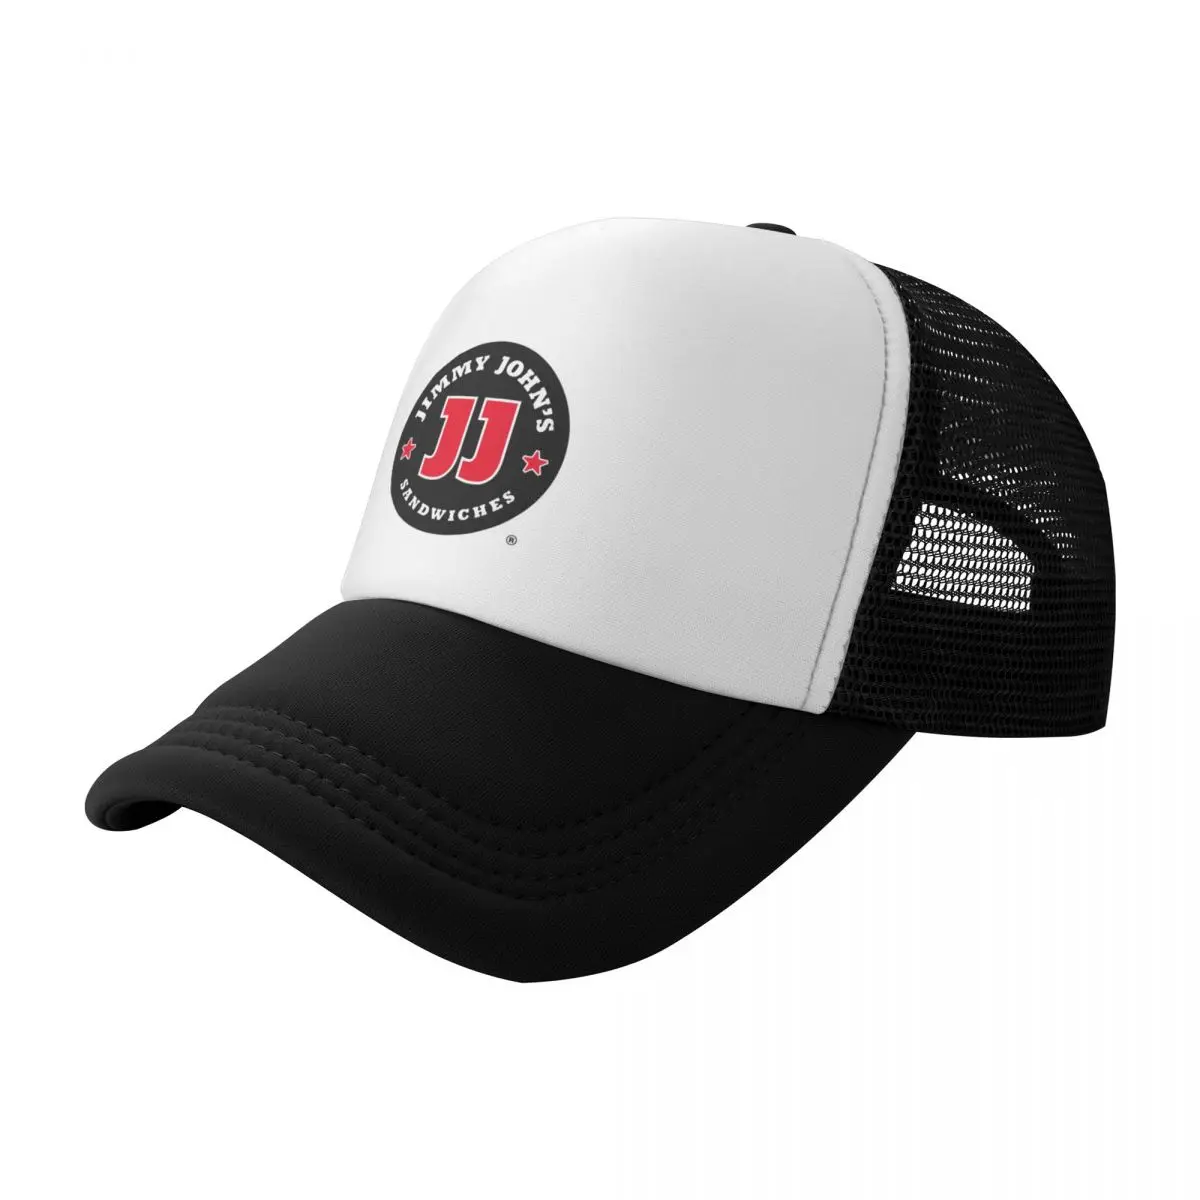 

THE BEST OF JIMMY JOHN'S бейсбольная Кепка от солнца Hat Beach custom Hat, Мужская одежда для гольфа, женская одежда для гольфа